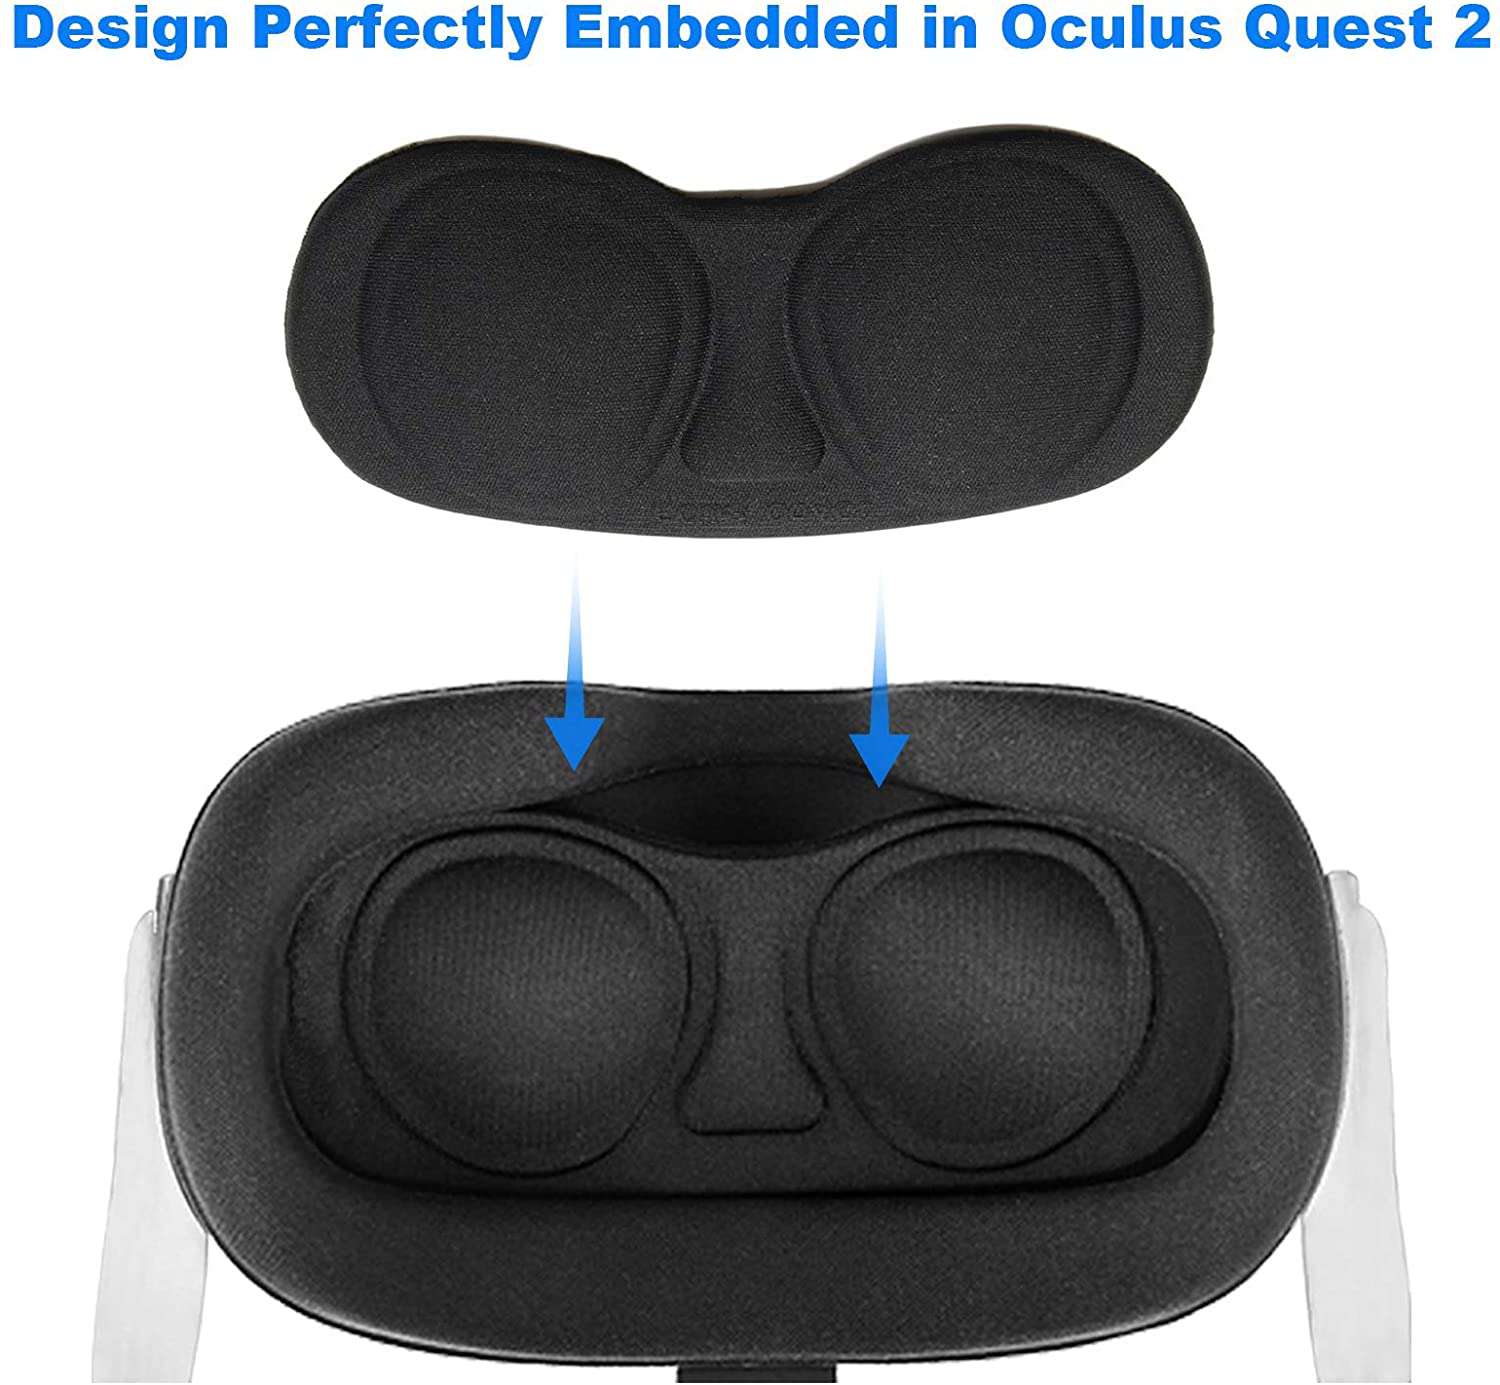 VR eye comfort foam pad designed for VR headsets, ensures a comfortable fit.